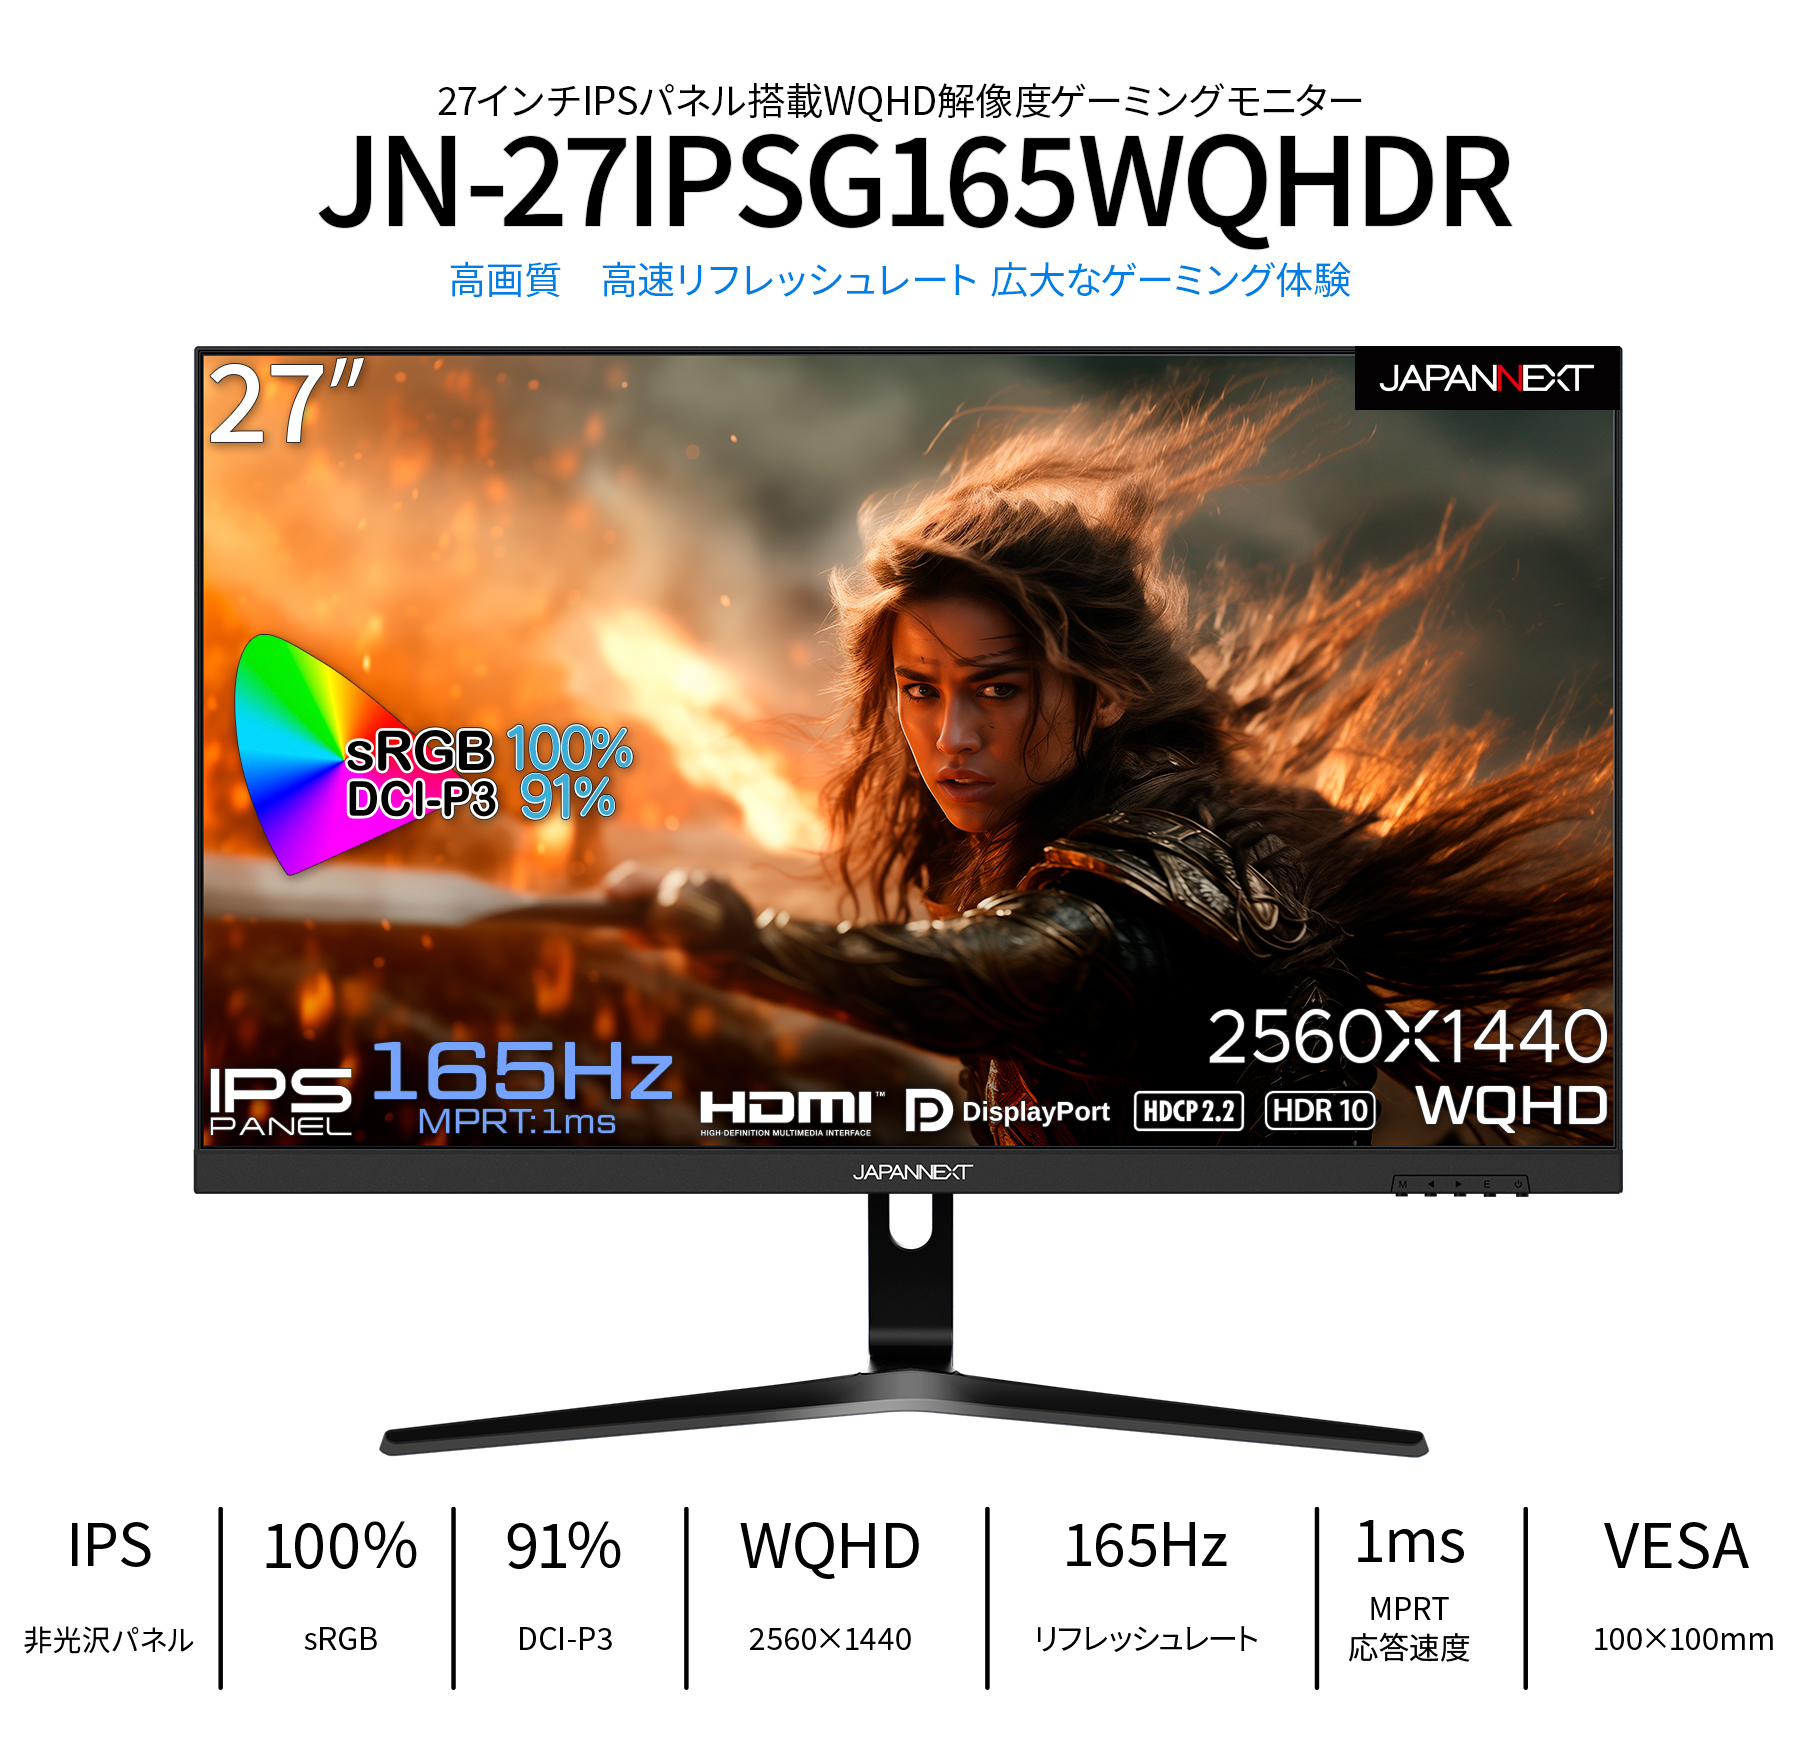 JAPANNEXT 27インチ WQHD(2560x1440)解像度 IPSパネル搭載